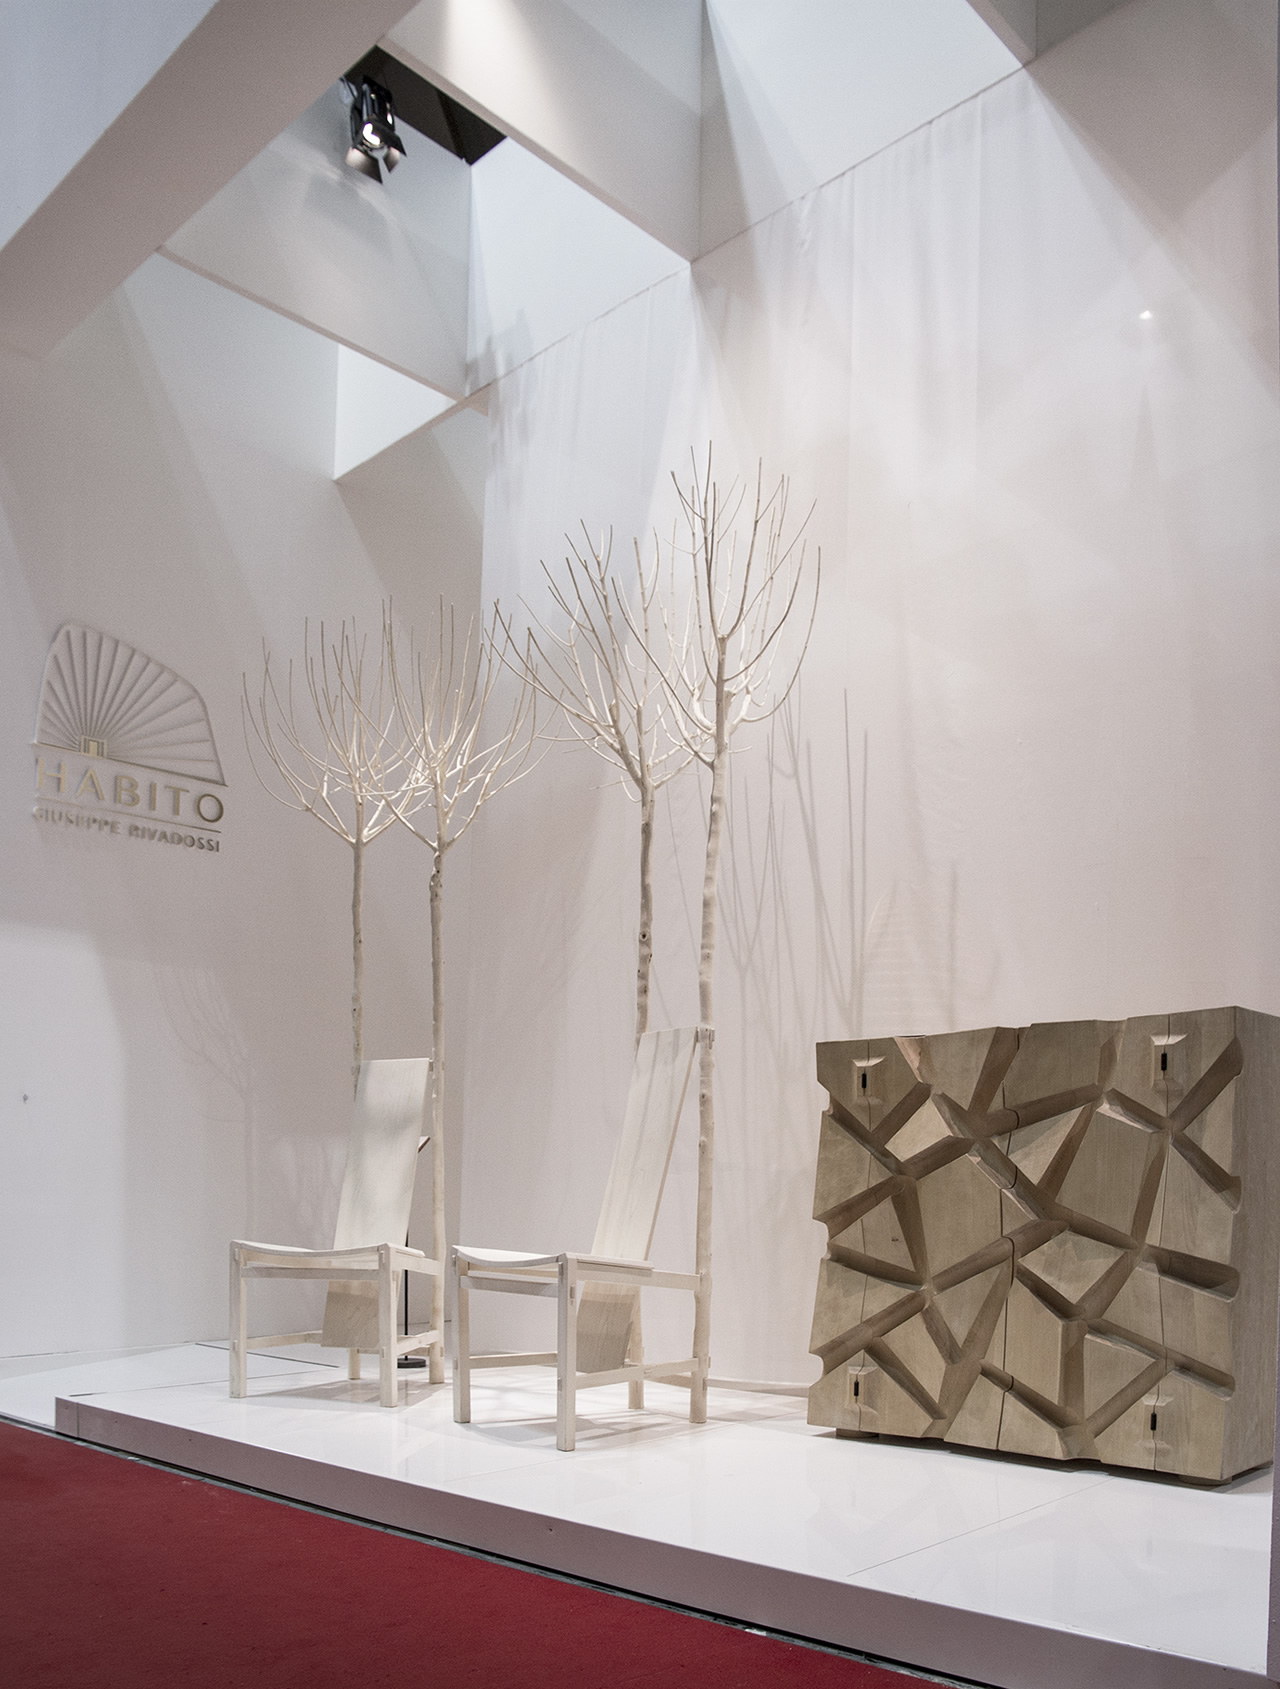 HABITO stand at the Milan Furniture Fair 2015